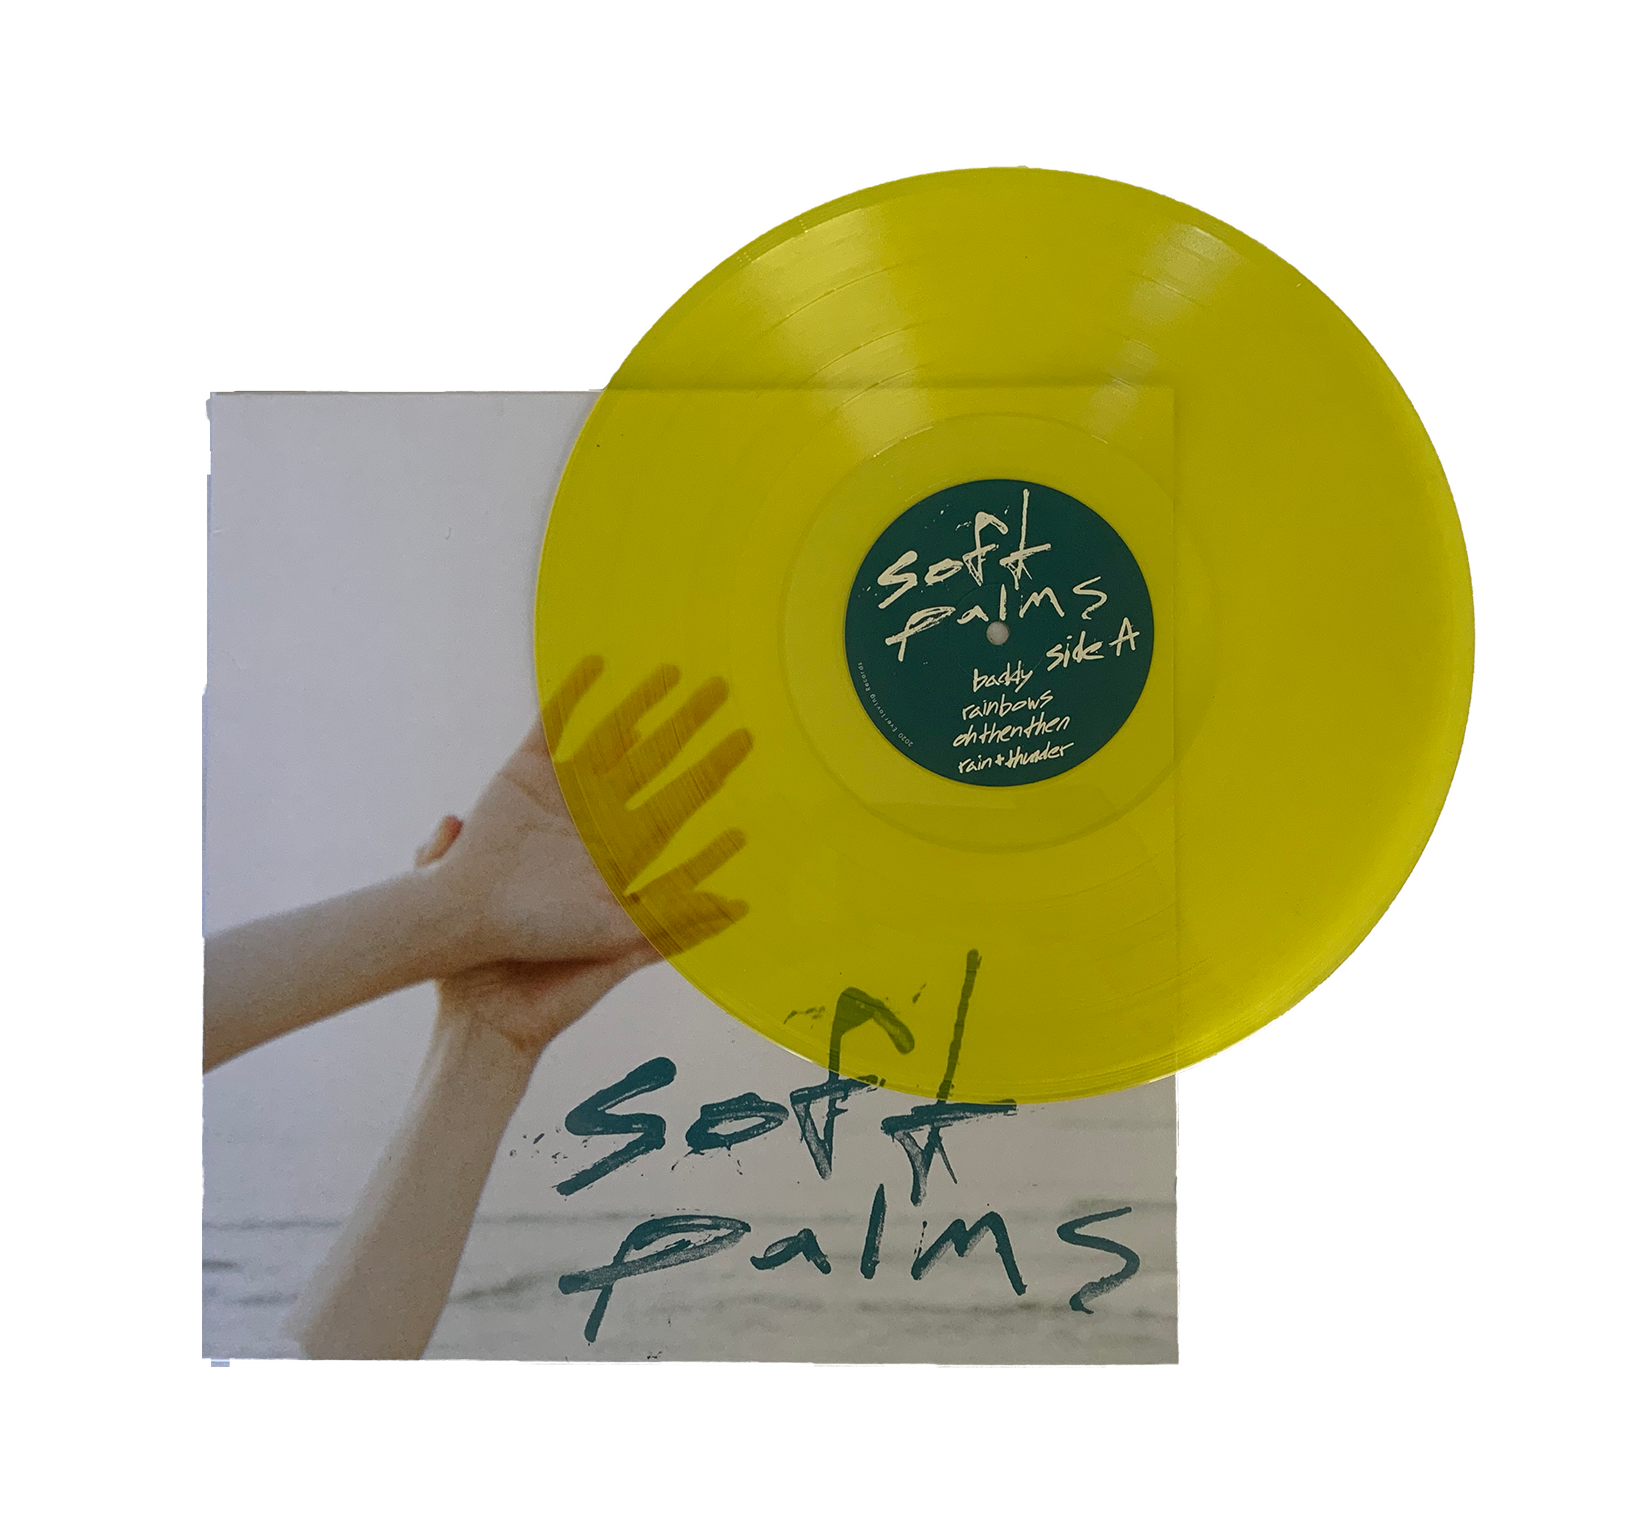 Soft Palms - ltd. edition yellow vinyl LP – Everloving Records